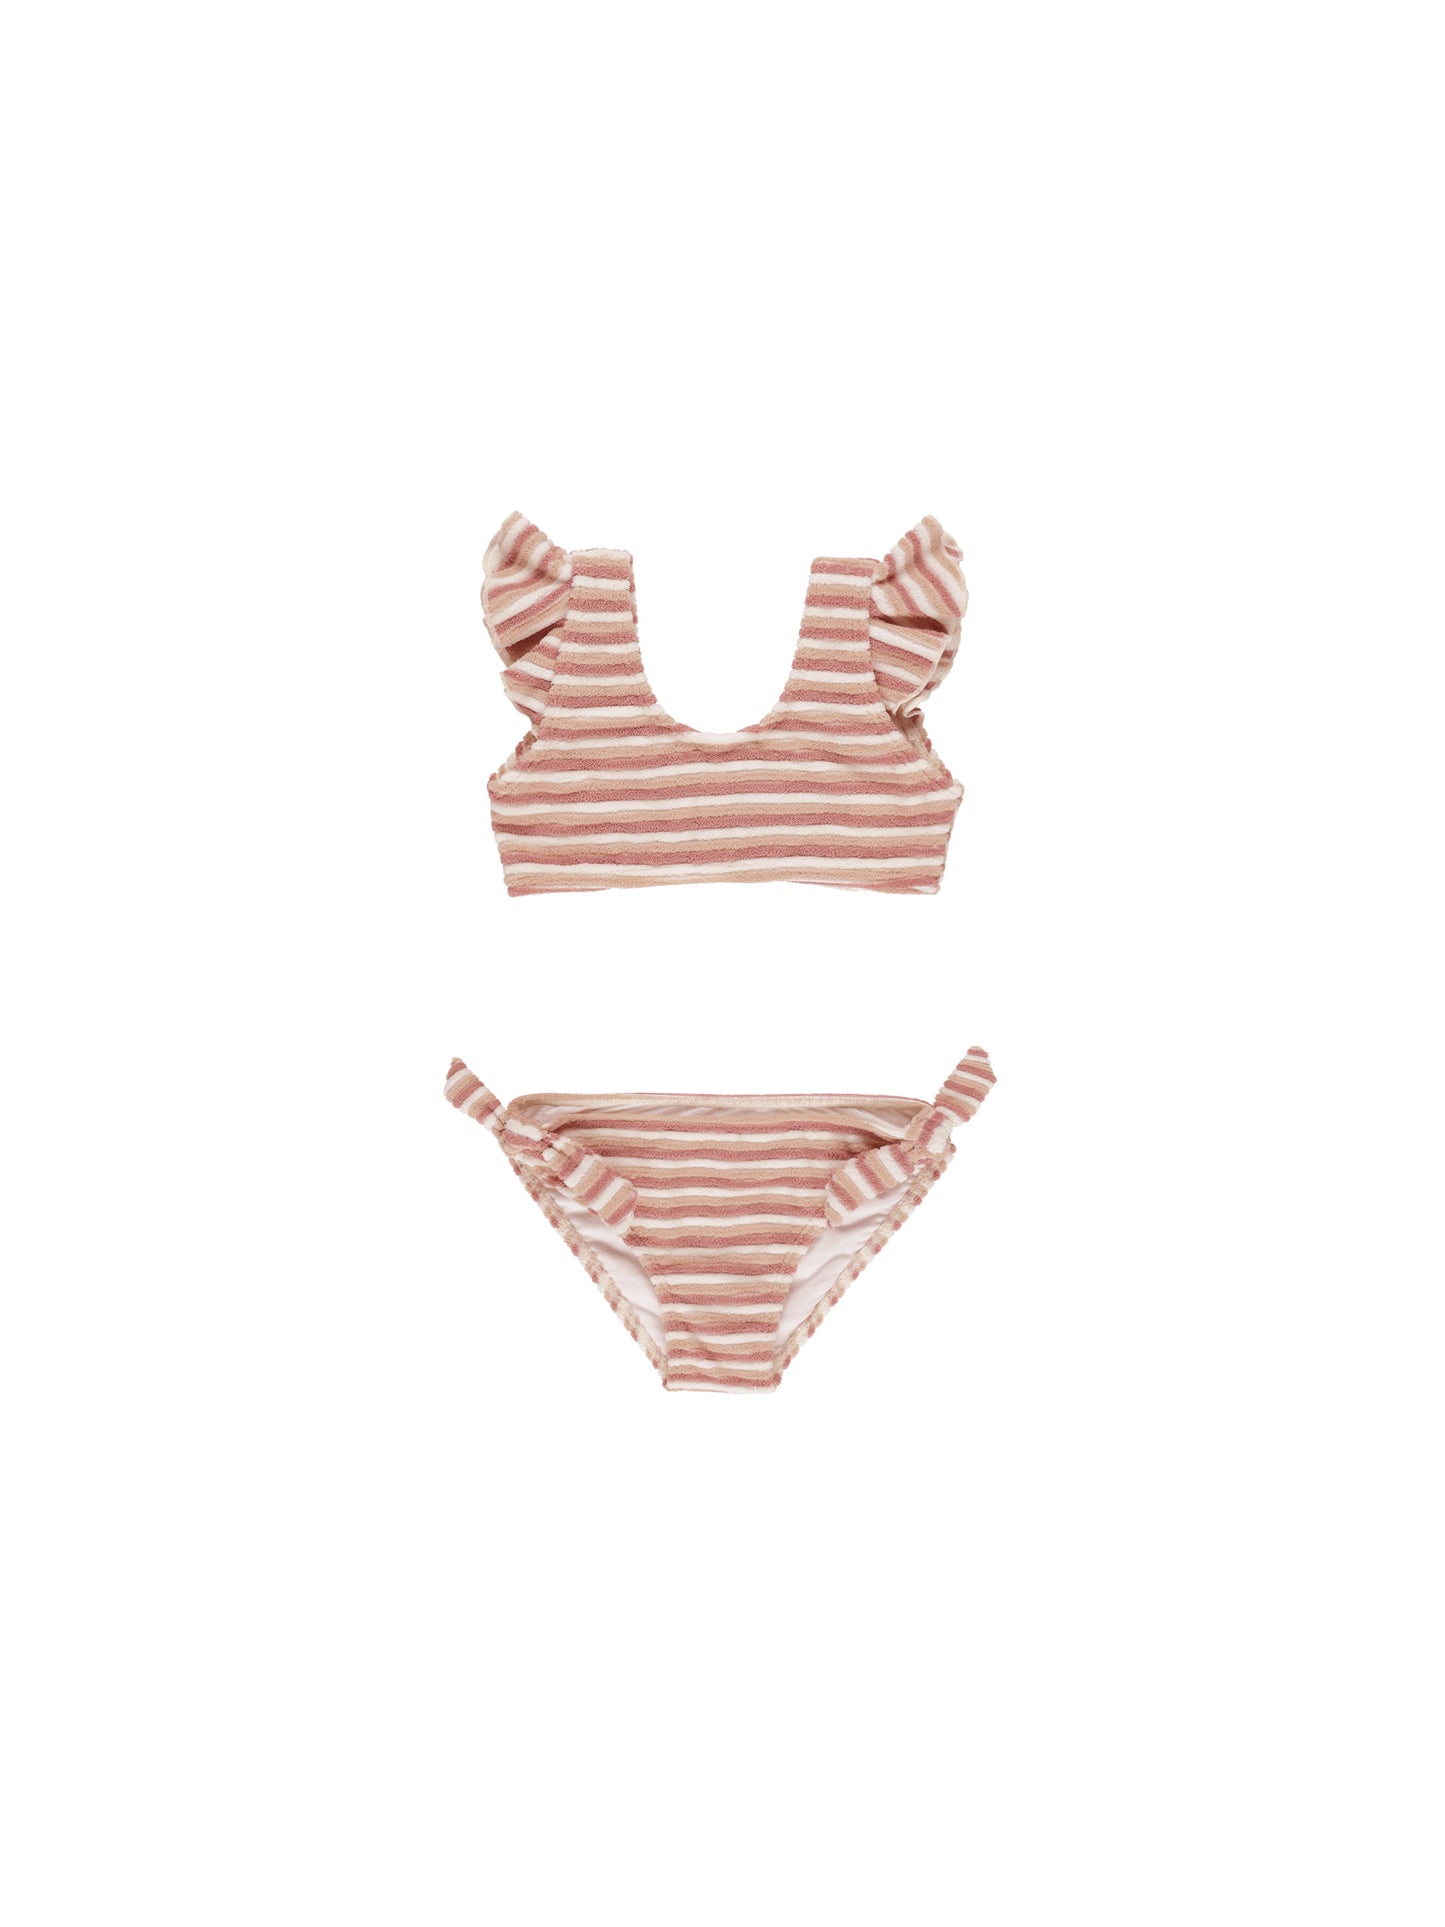 Rylee + Cru - Ojai Bikini - Pink Stripe